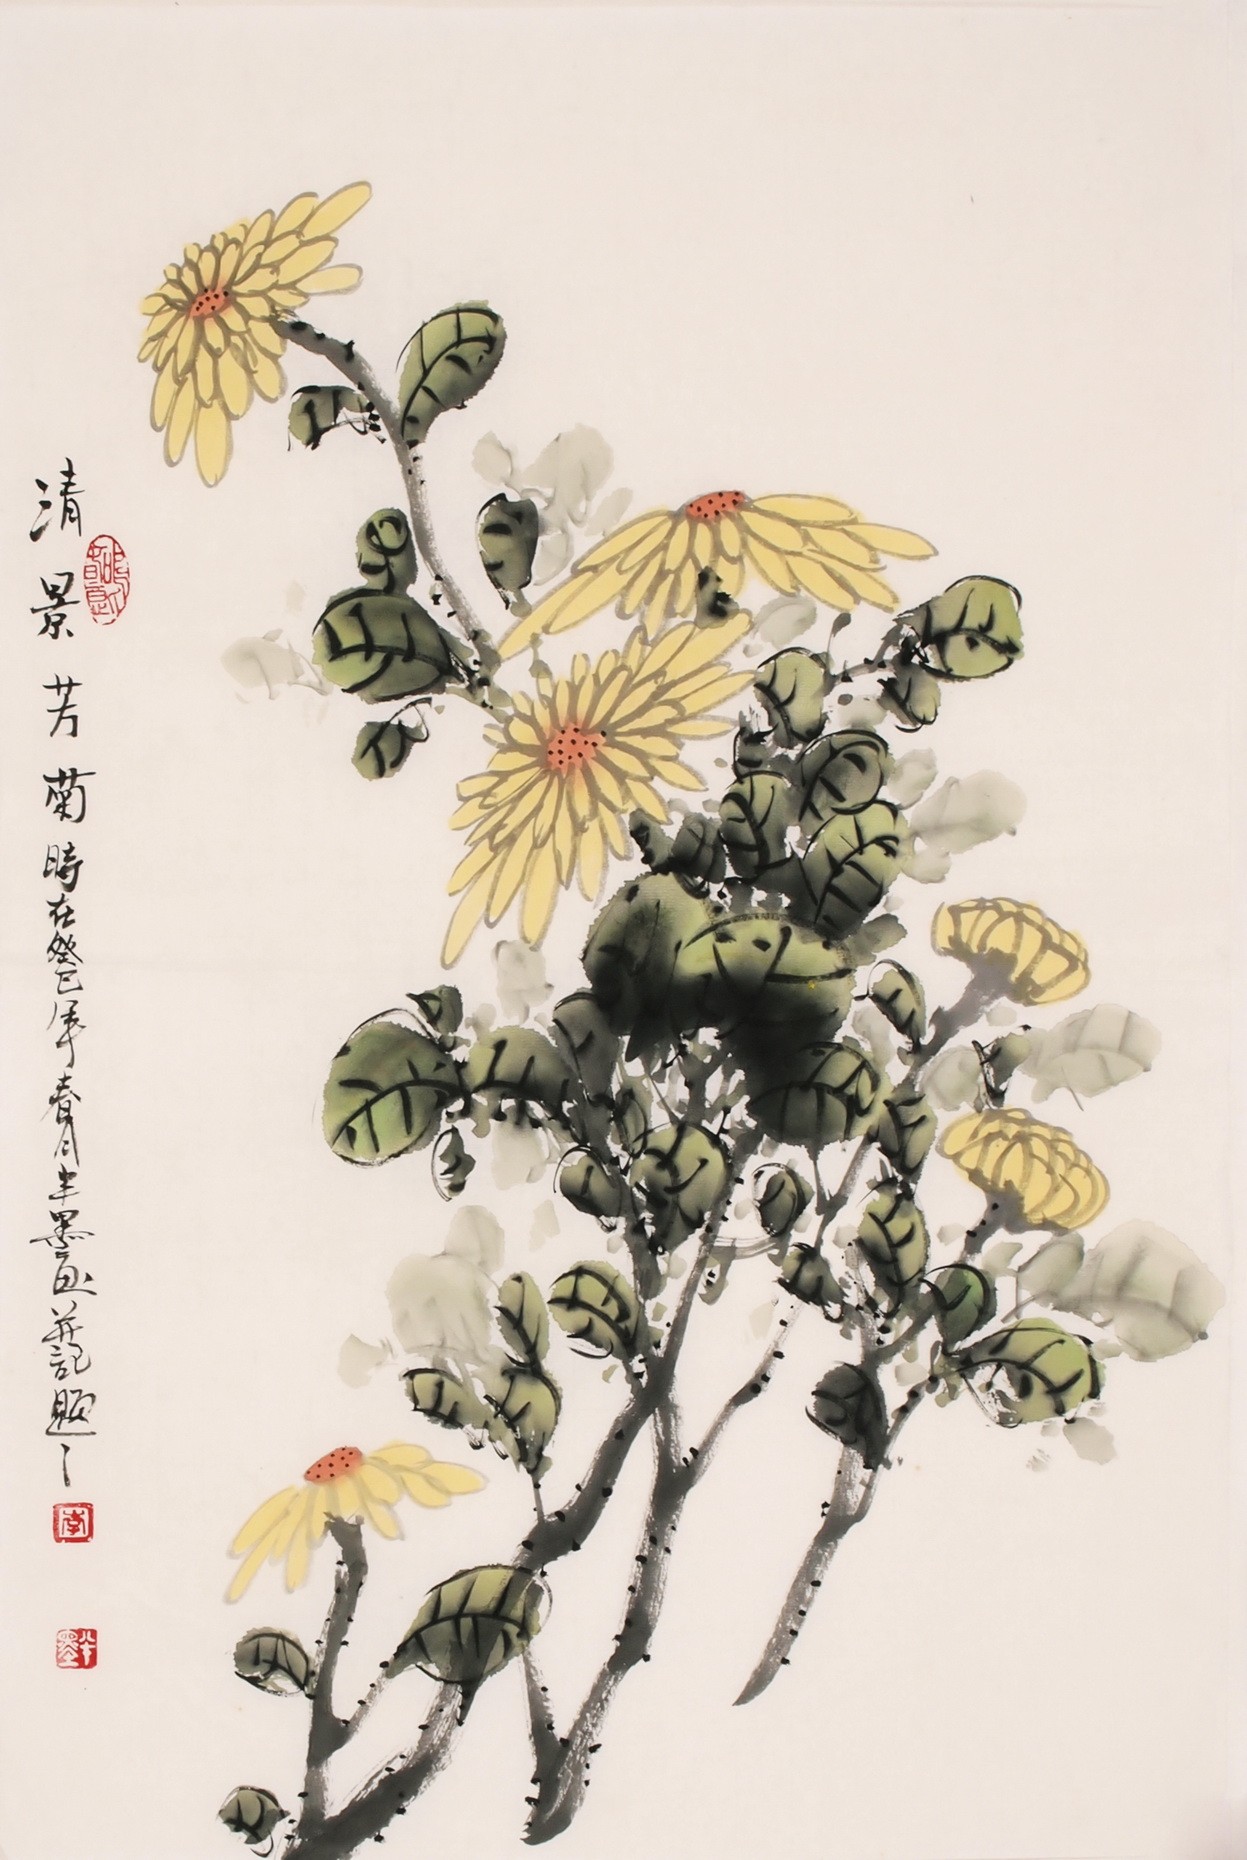 Chrysanthemum - CNAG000829